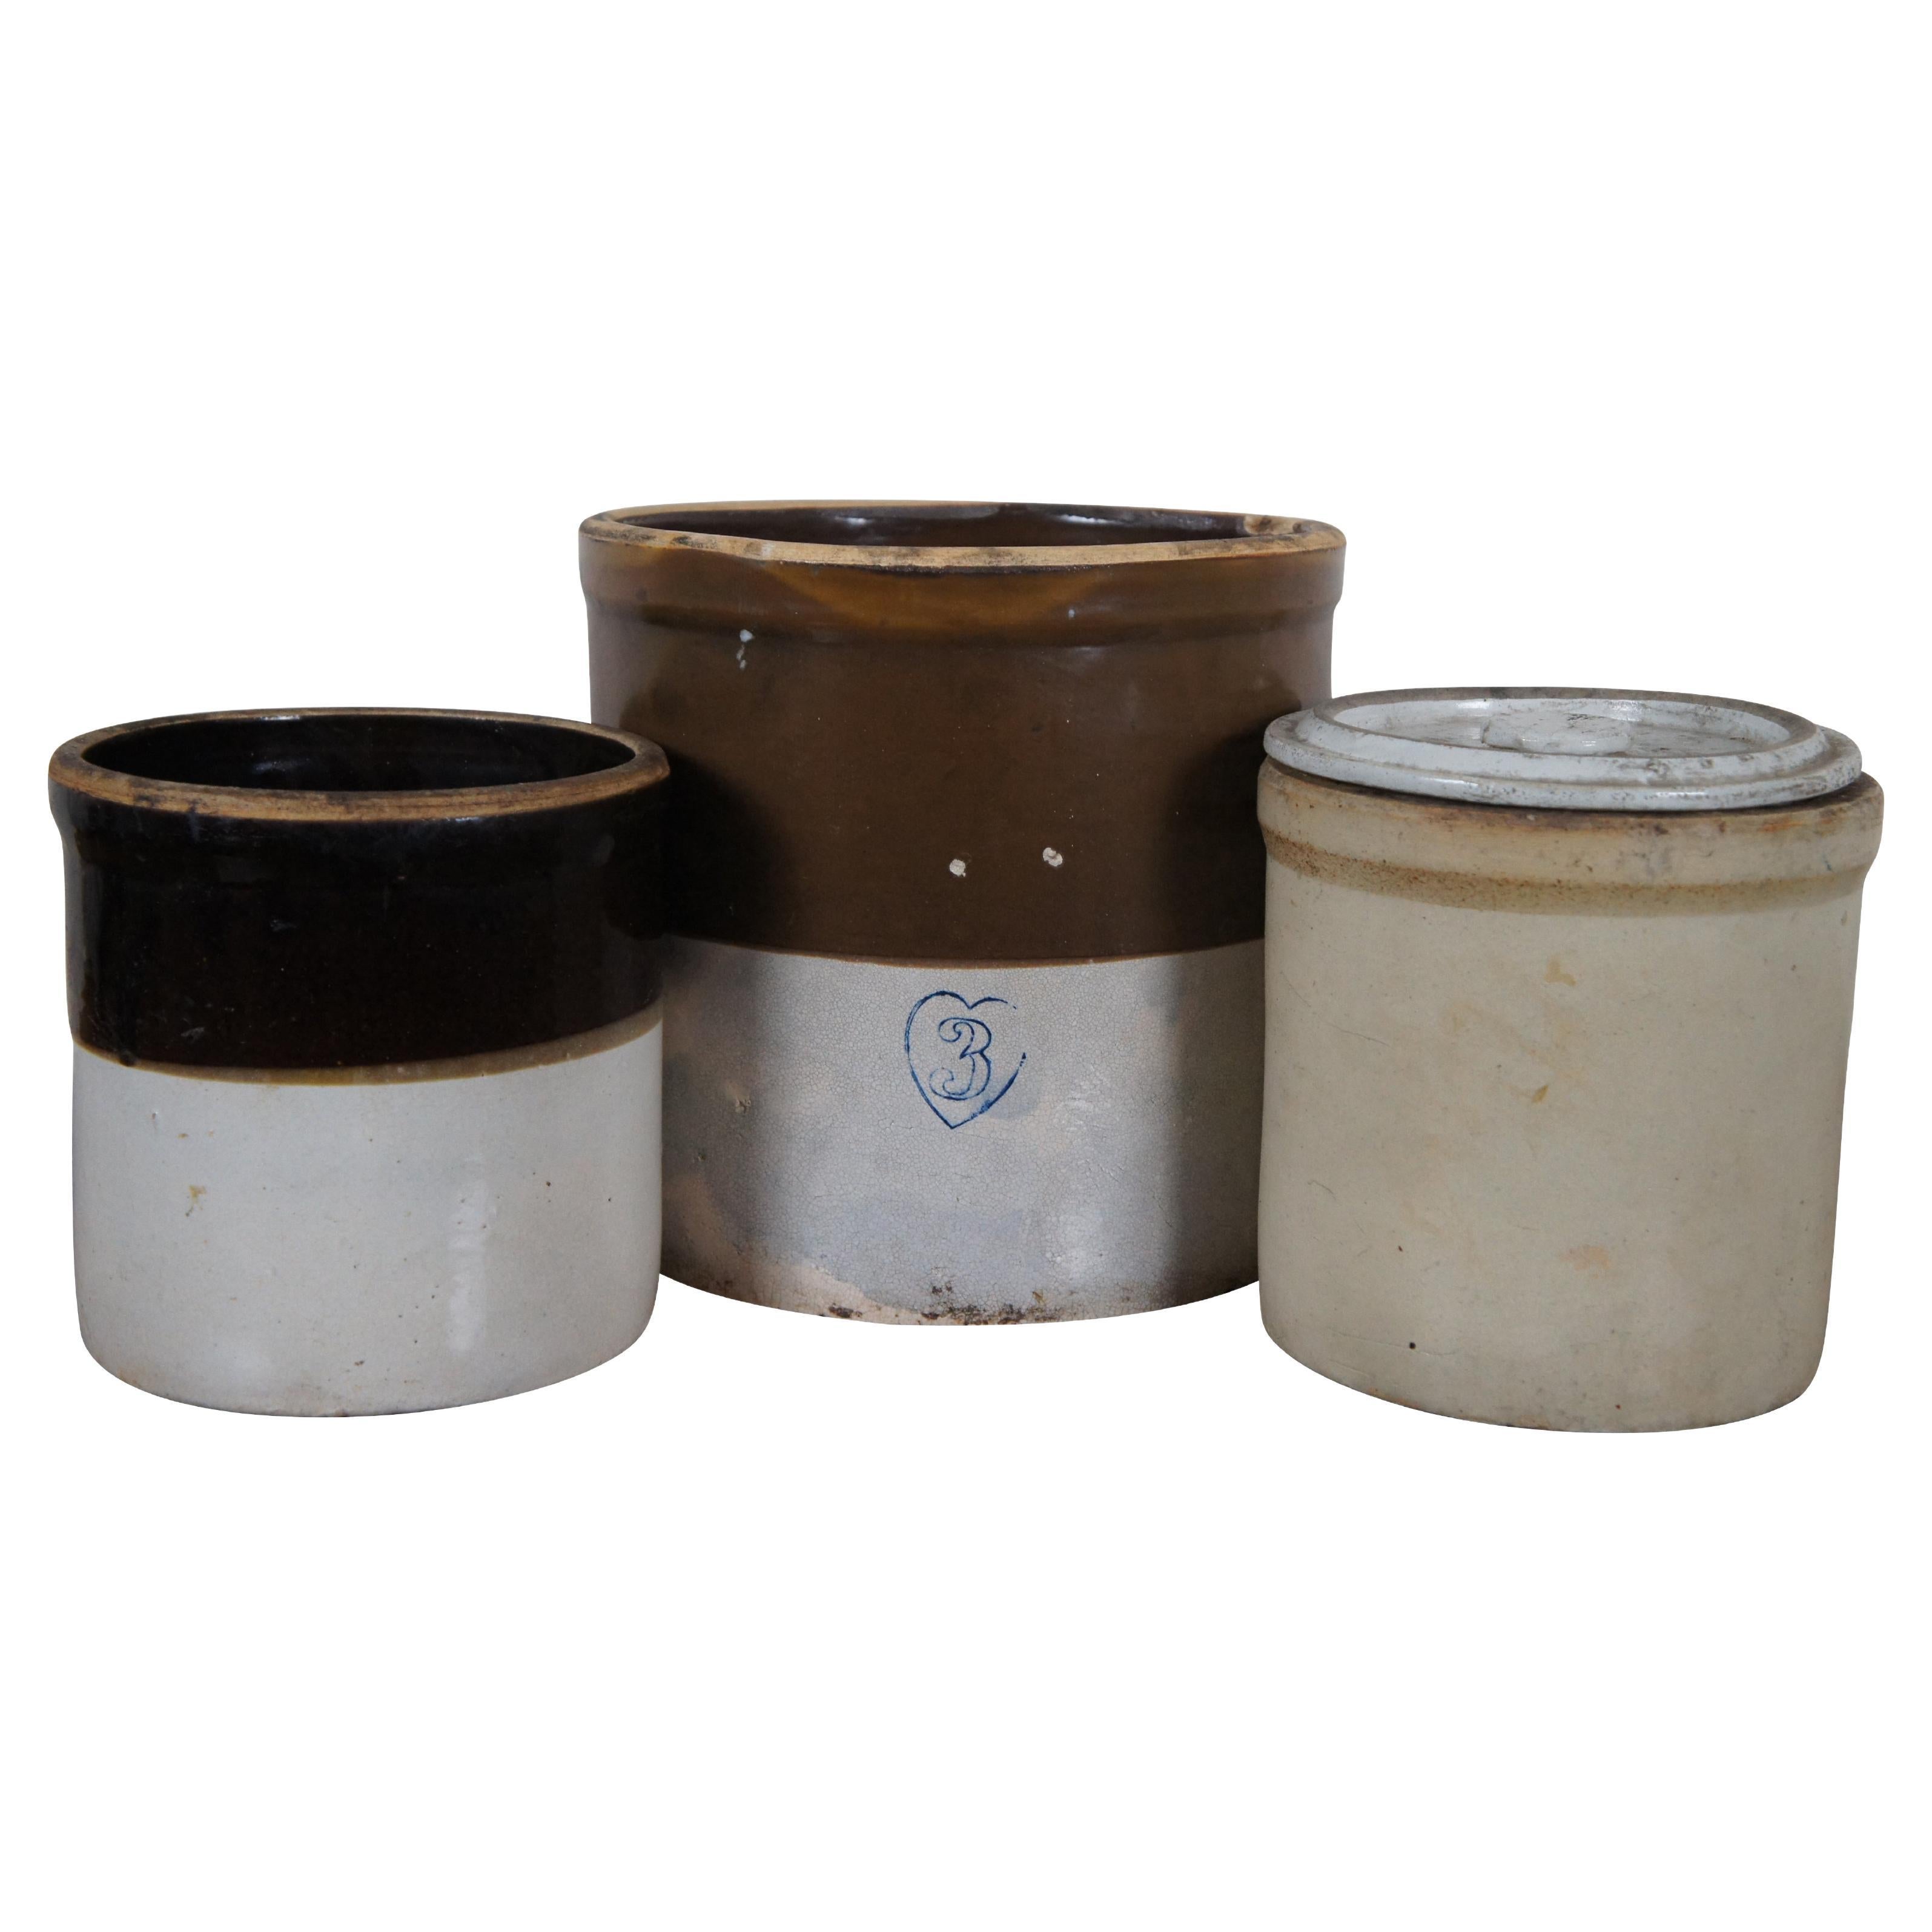 https://a.1stdibscdn.com/3-primitive-antique-salt-glaze-american-stoneware-crocks-lid-3-gallon-1-gallon-for-sale/f_53432/f_342299321683799778678/f_34229932_1683799779866_bg_processed.jpg